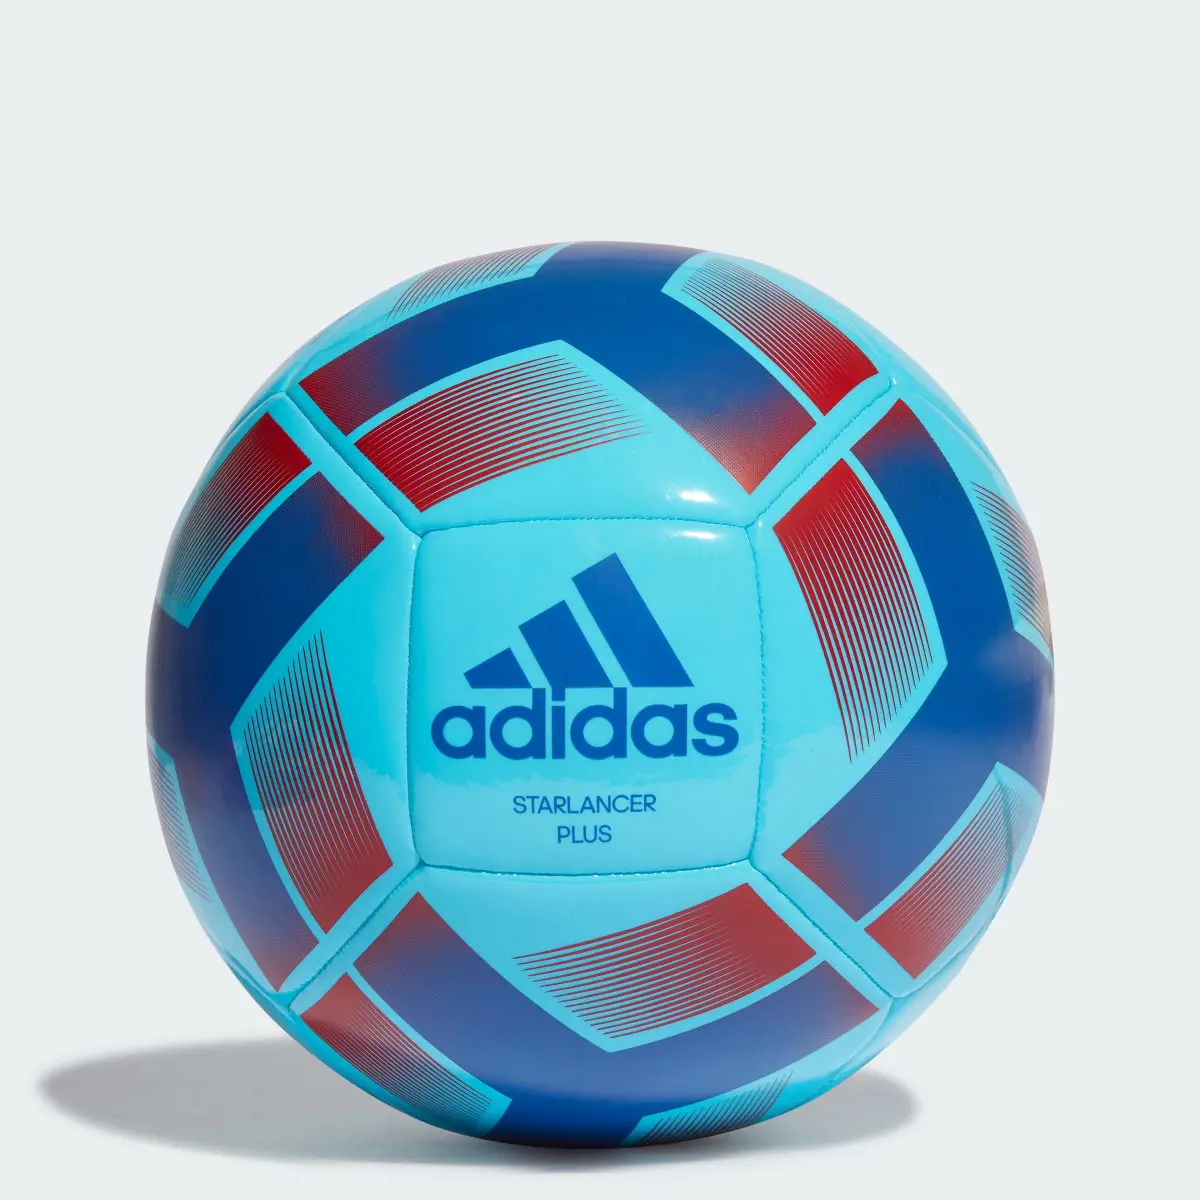 Adidas Starlancer Plus Ball. 1